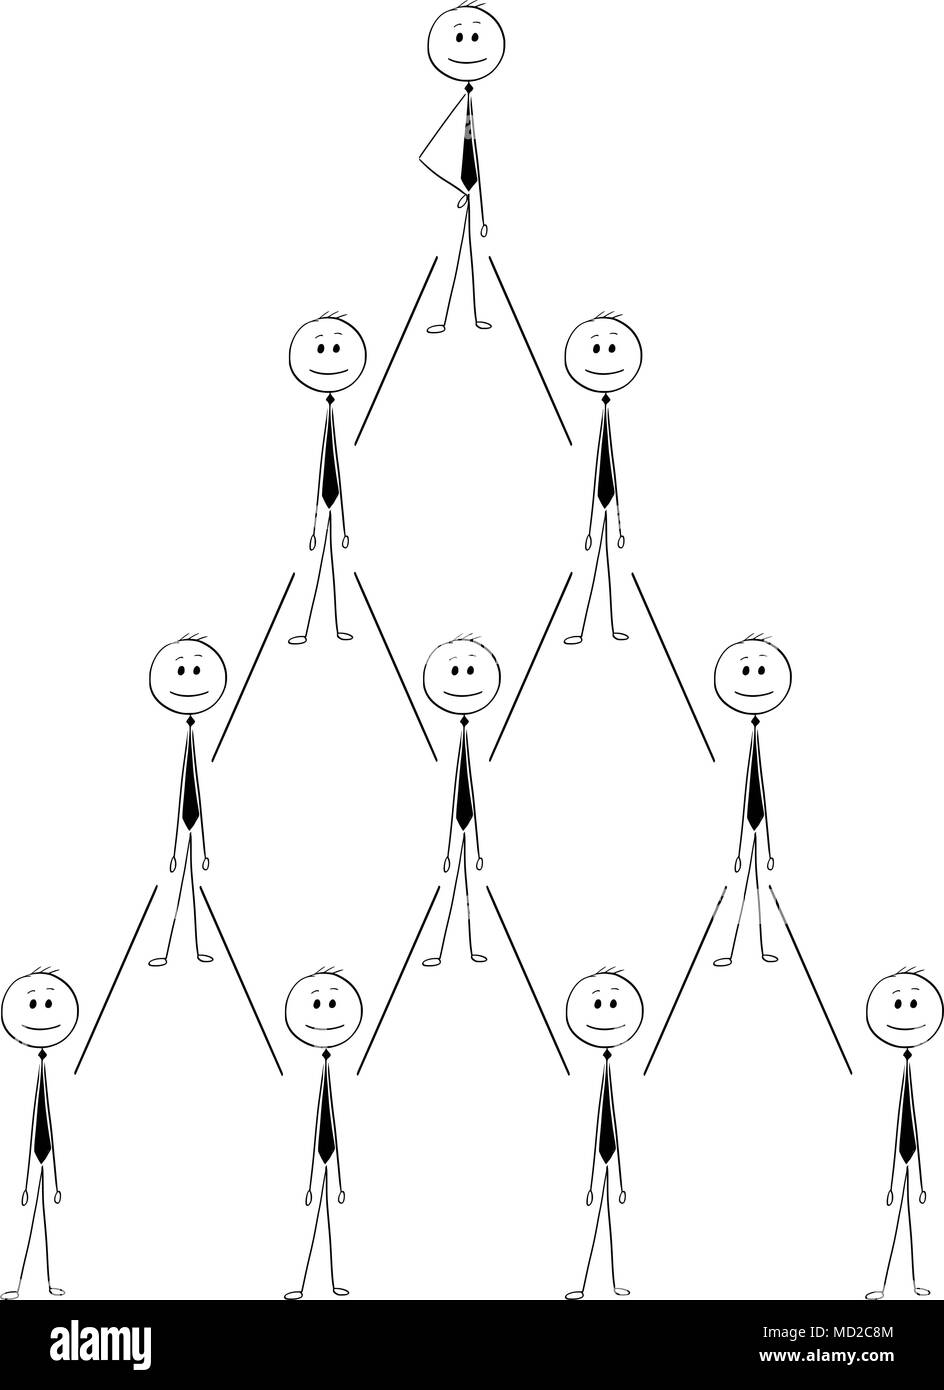 Cartoon of Business Organization Team Hierarchy Scheme Stock Vector